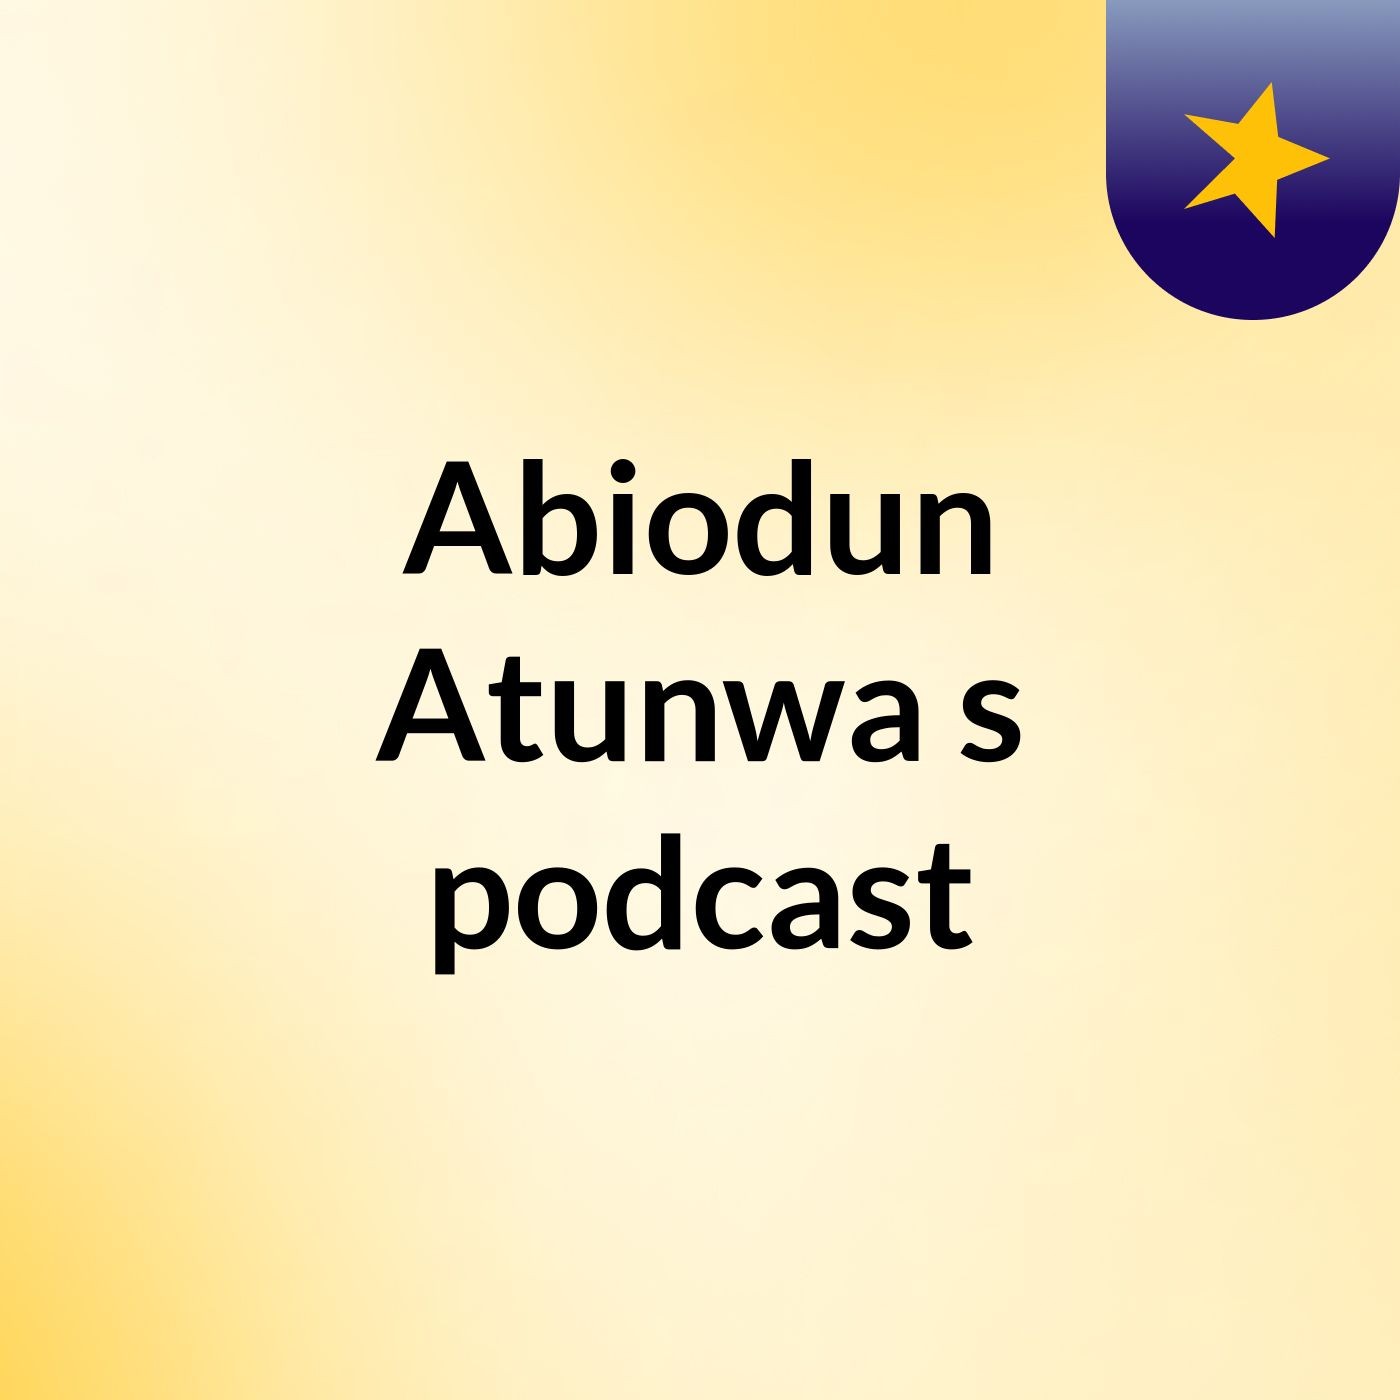 Abiodun Atunwa's podcast